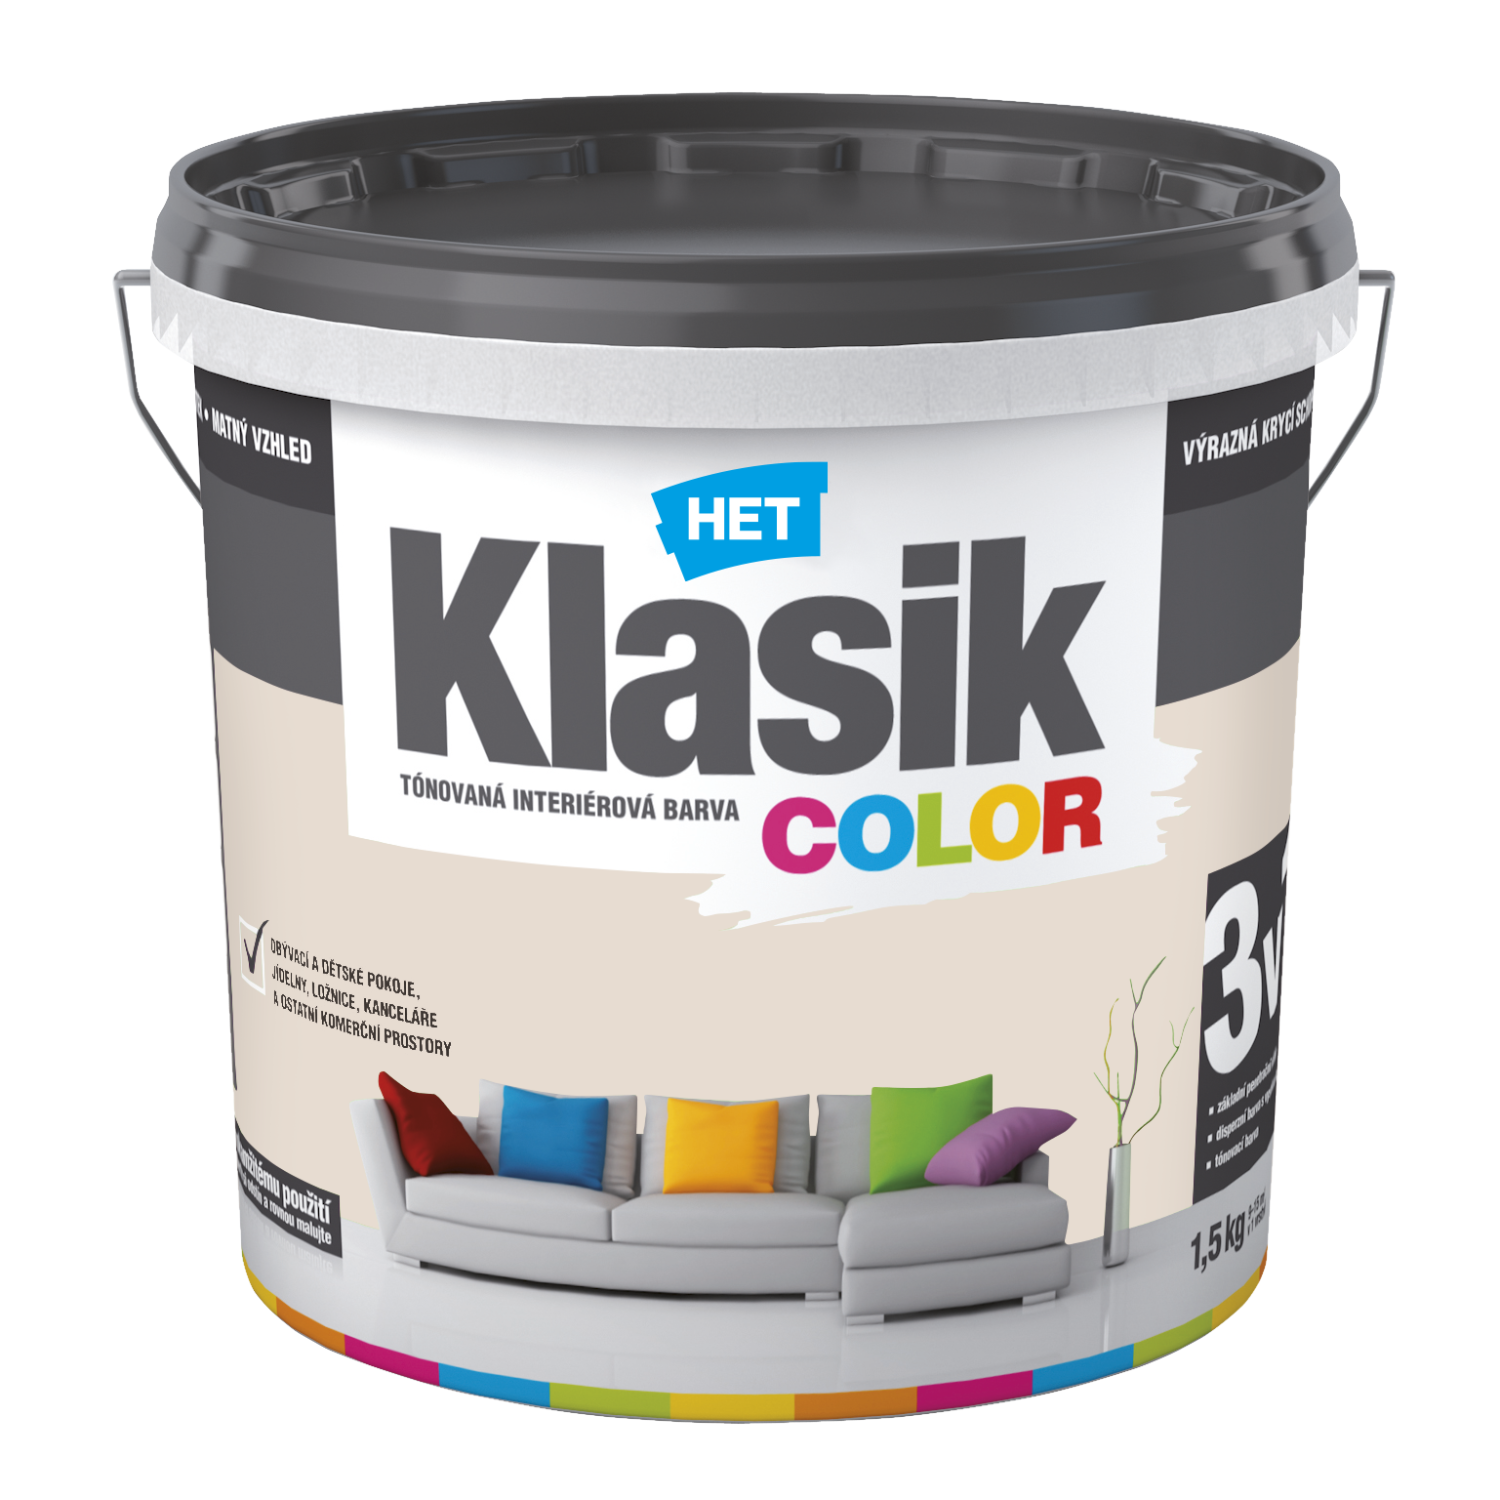 HET Klasik COLOR tónovaná interiérová akrylátová disperzná oteruvzdorná farba 1,5 kg, KC0217 - béžový kávový